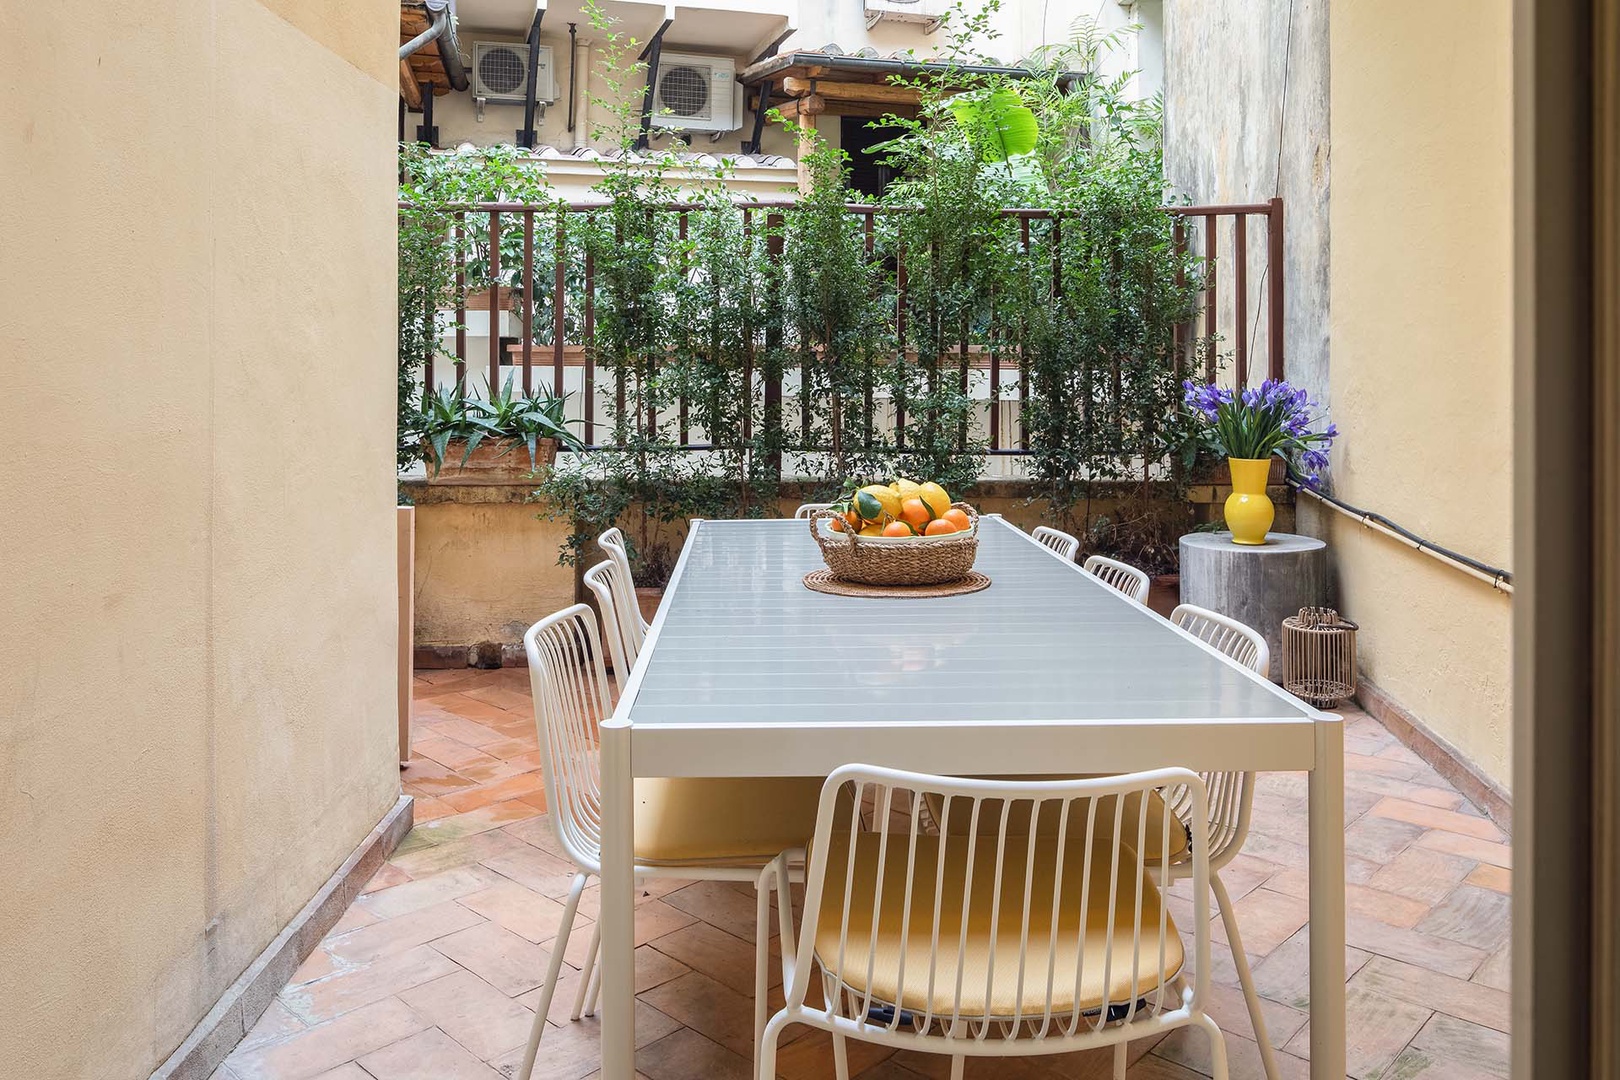 Dine al fresco on the private terrace - a rare feature!